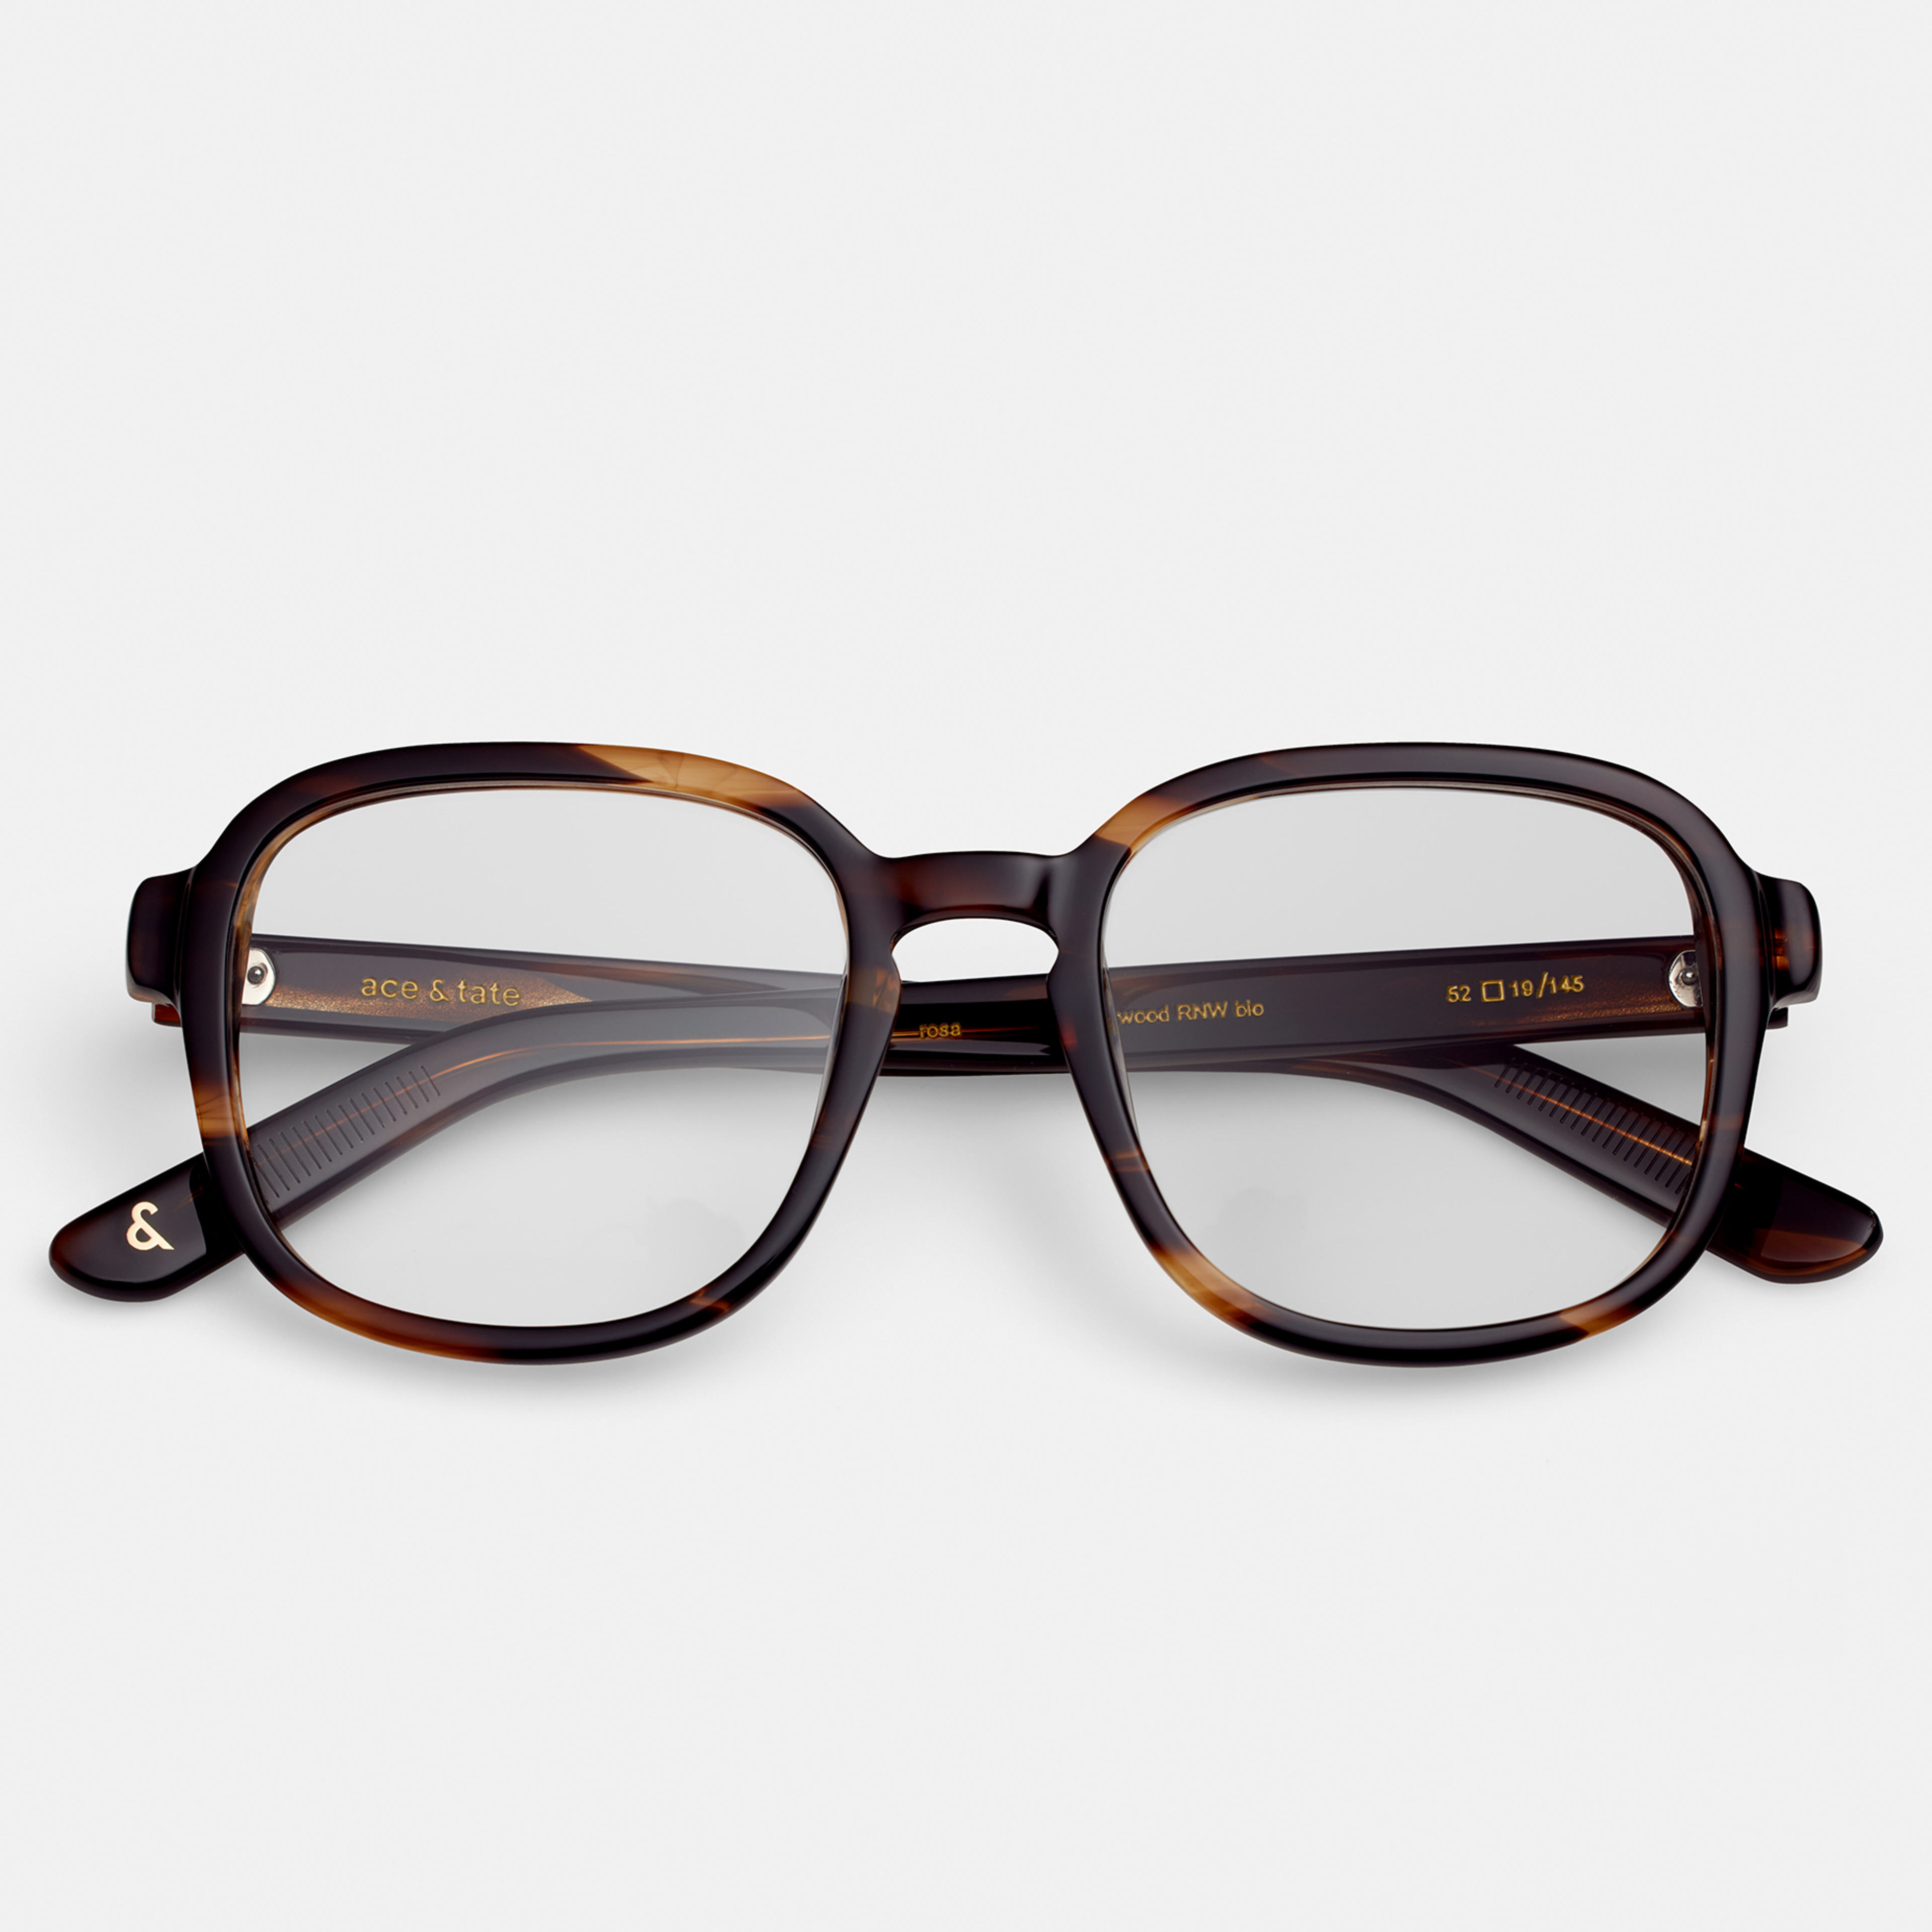 Ace & Tate Glasses | Square Renew bio acetate in Brown